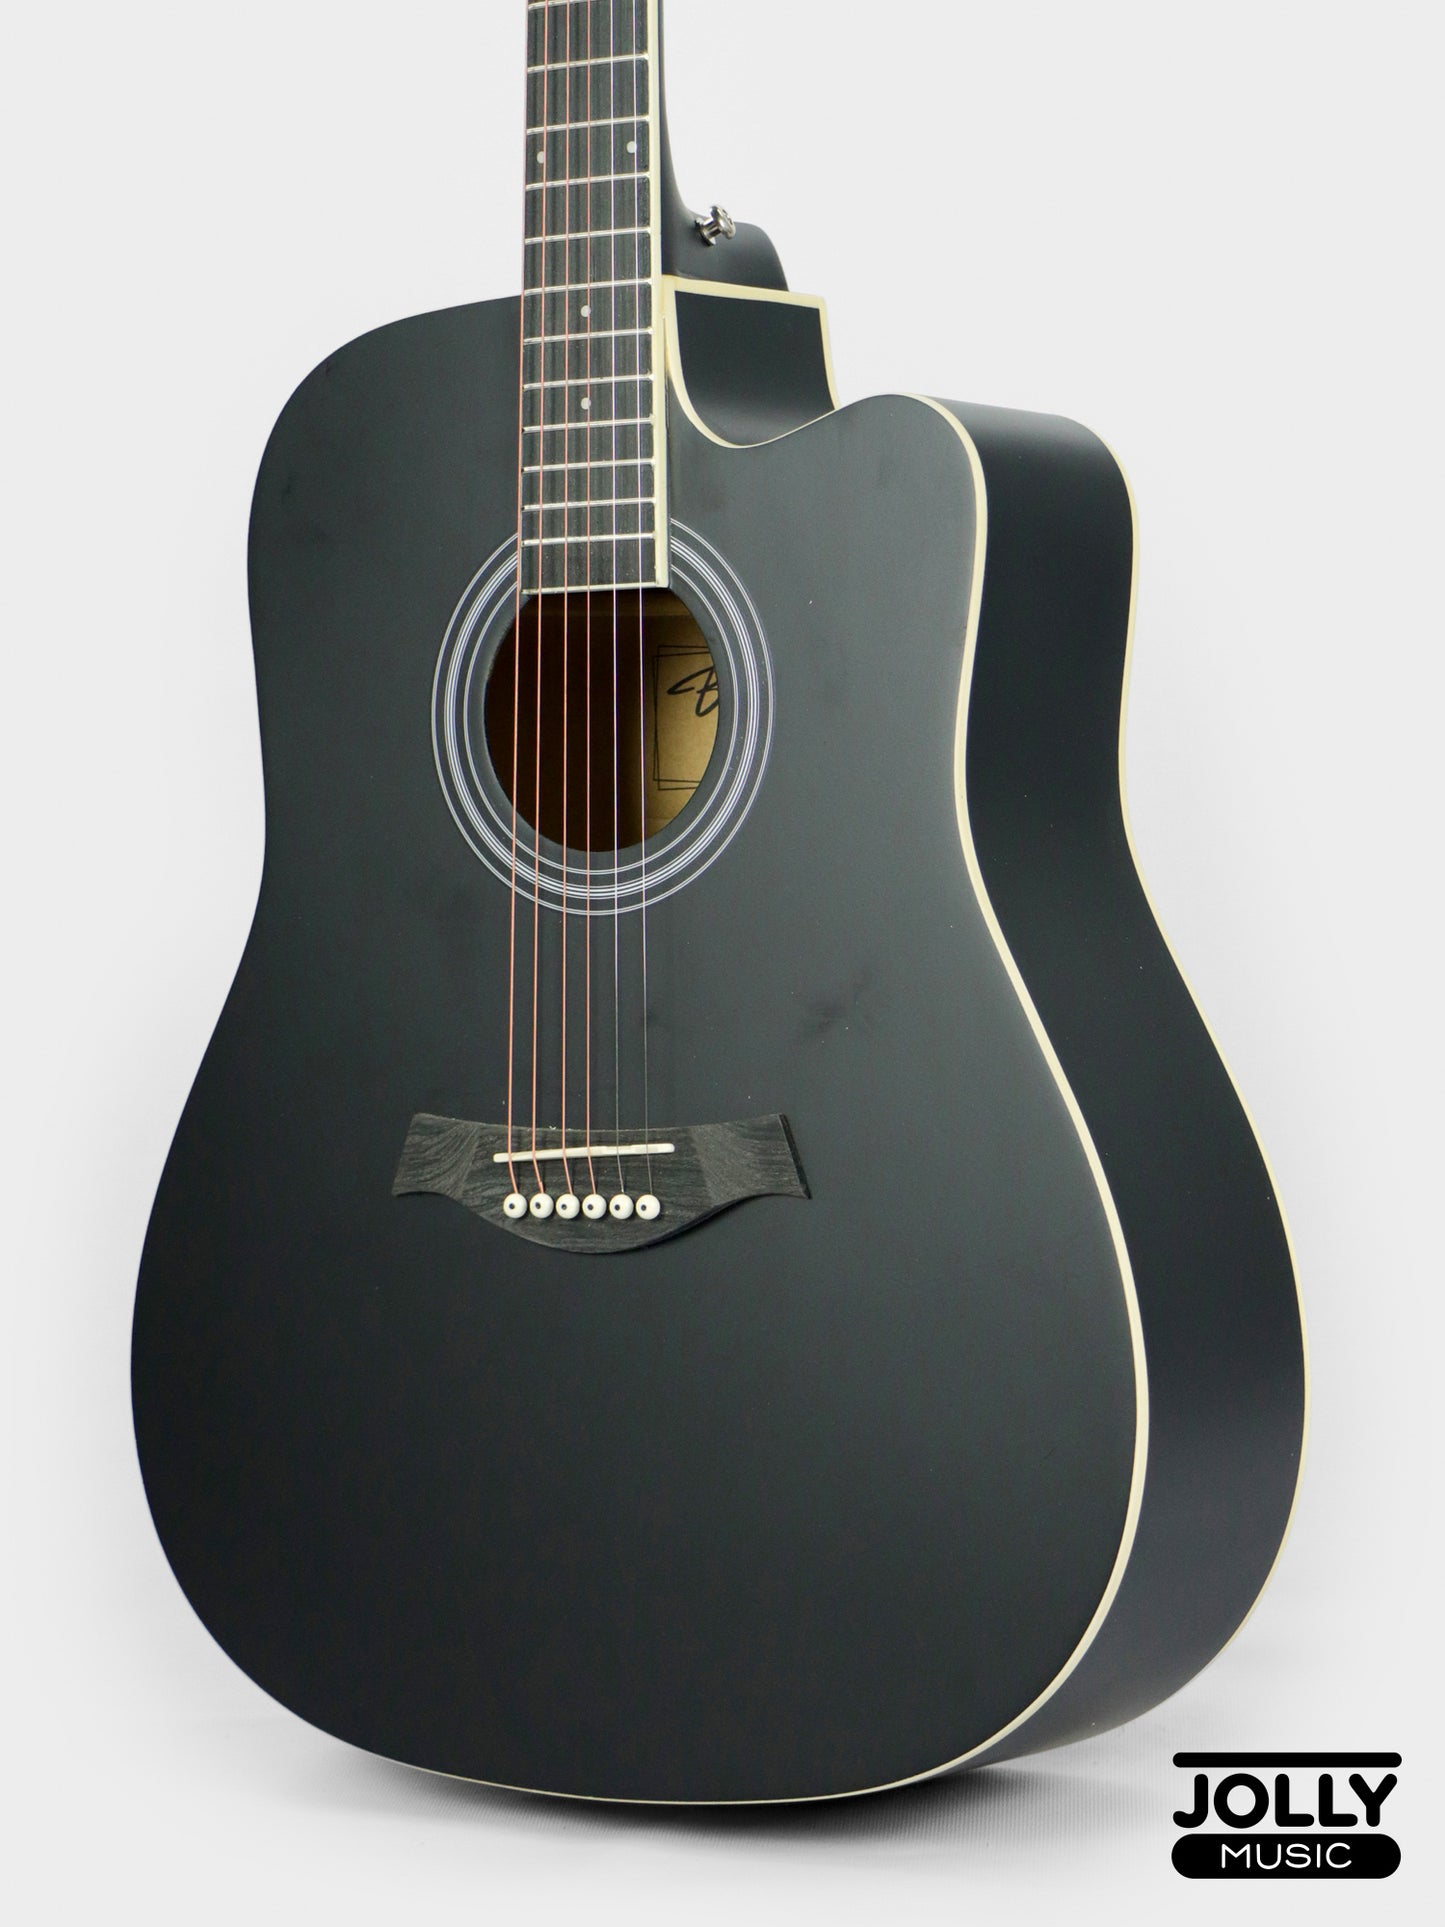 Baccero 41" Guitar KT-41Y Truss Rod w/ Case, 3 Picks, Tuner, Capo - Black